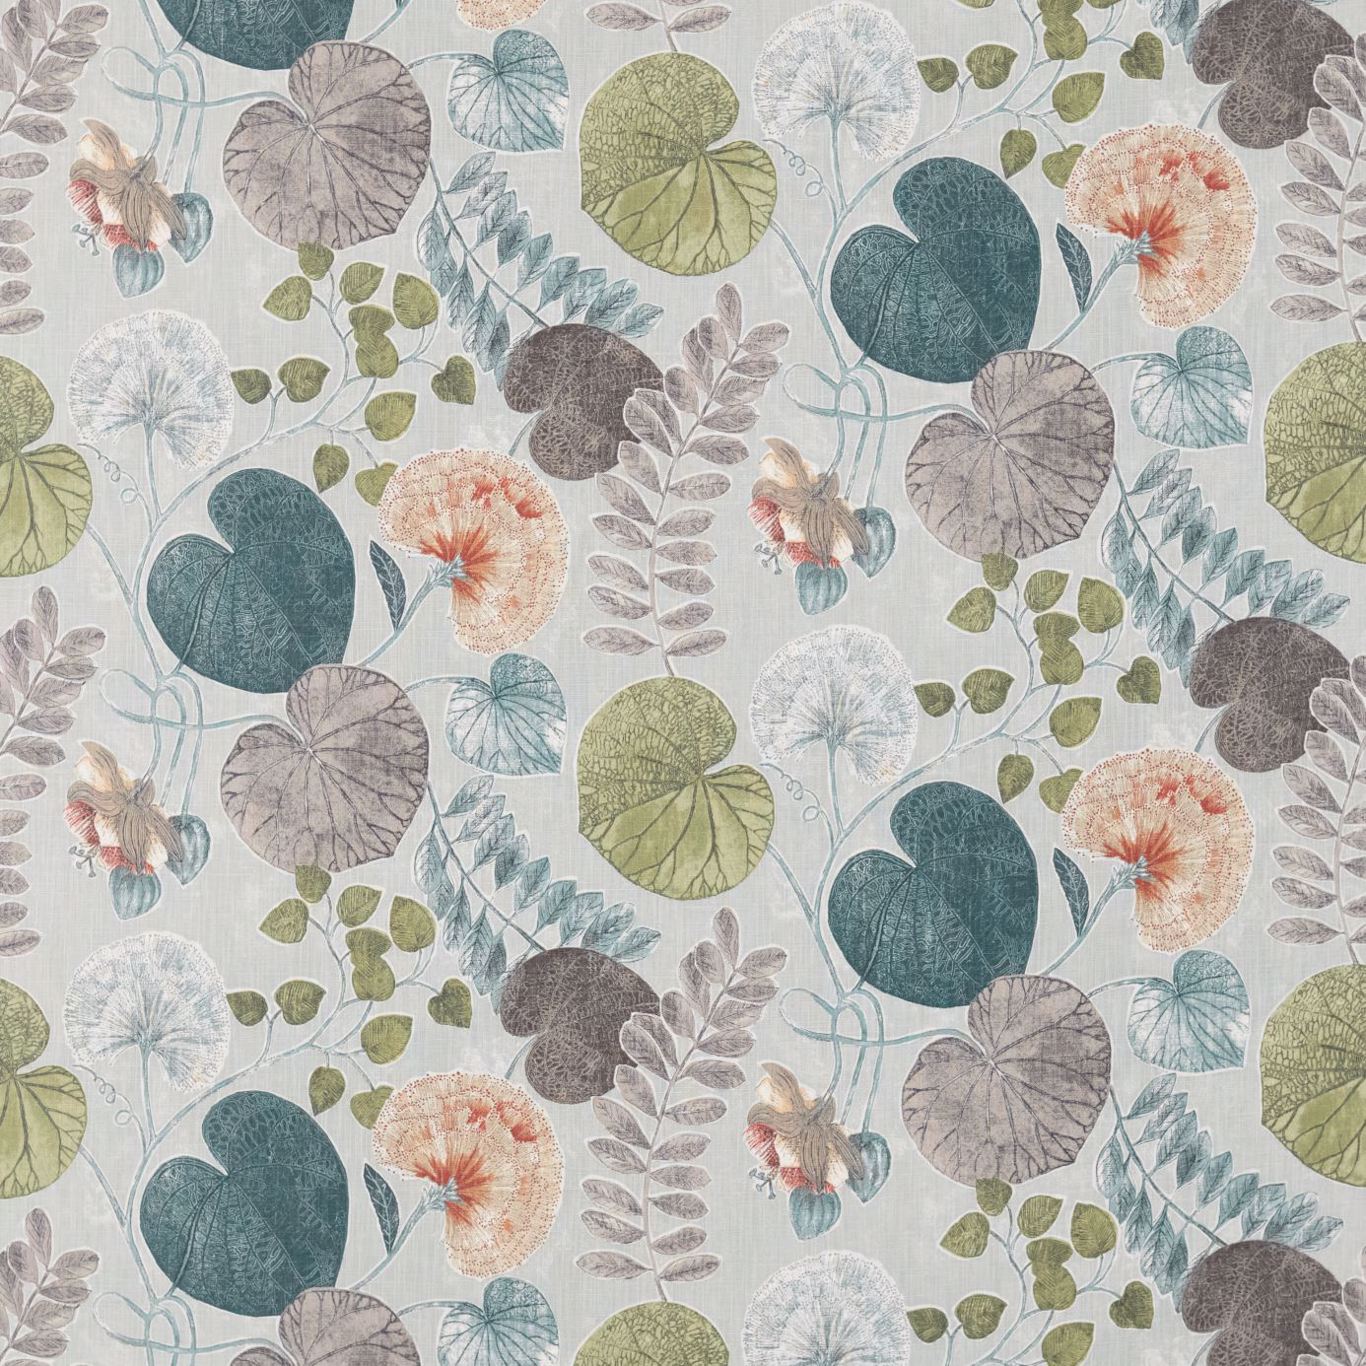 Dardanella Fabric by Harlequin - HGAT120416 - Seaglass/Russet